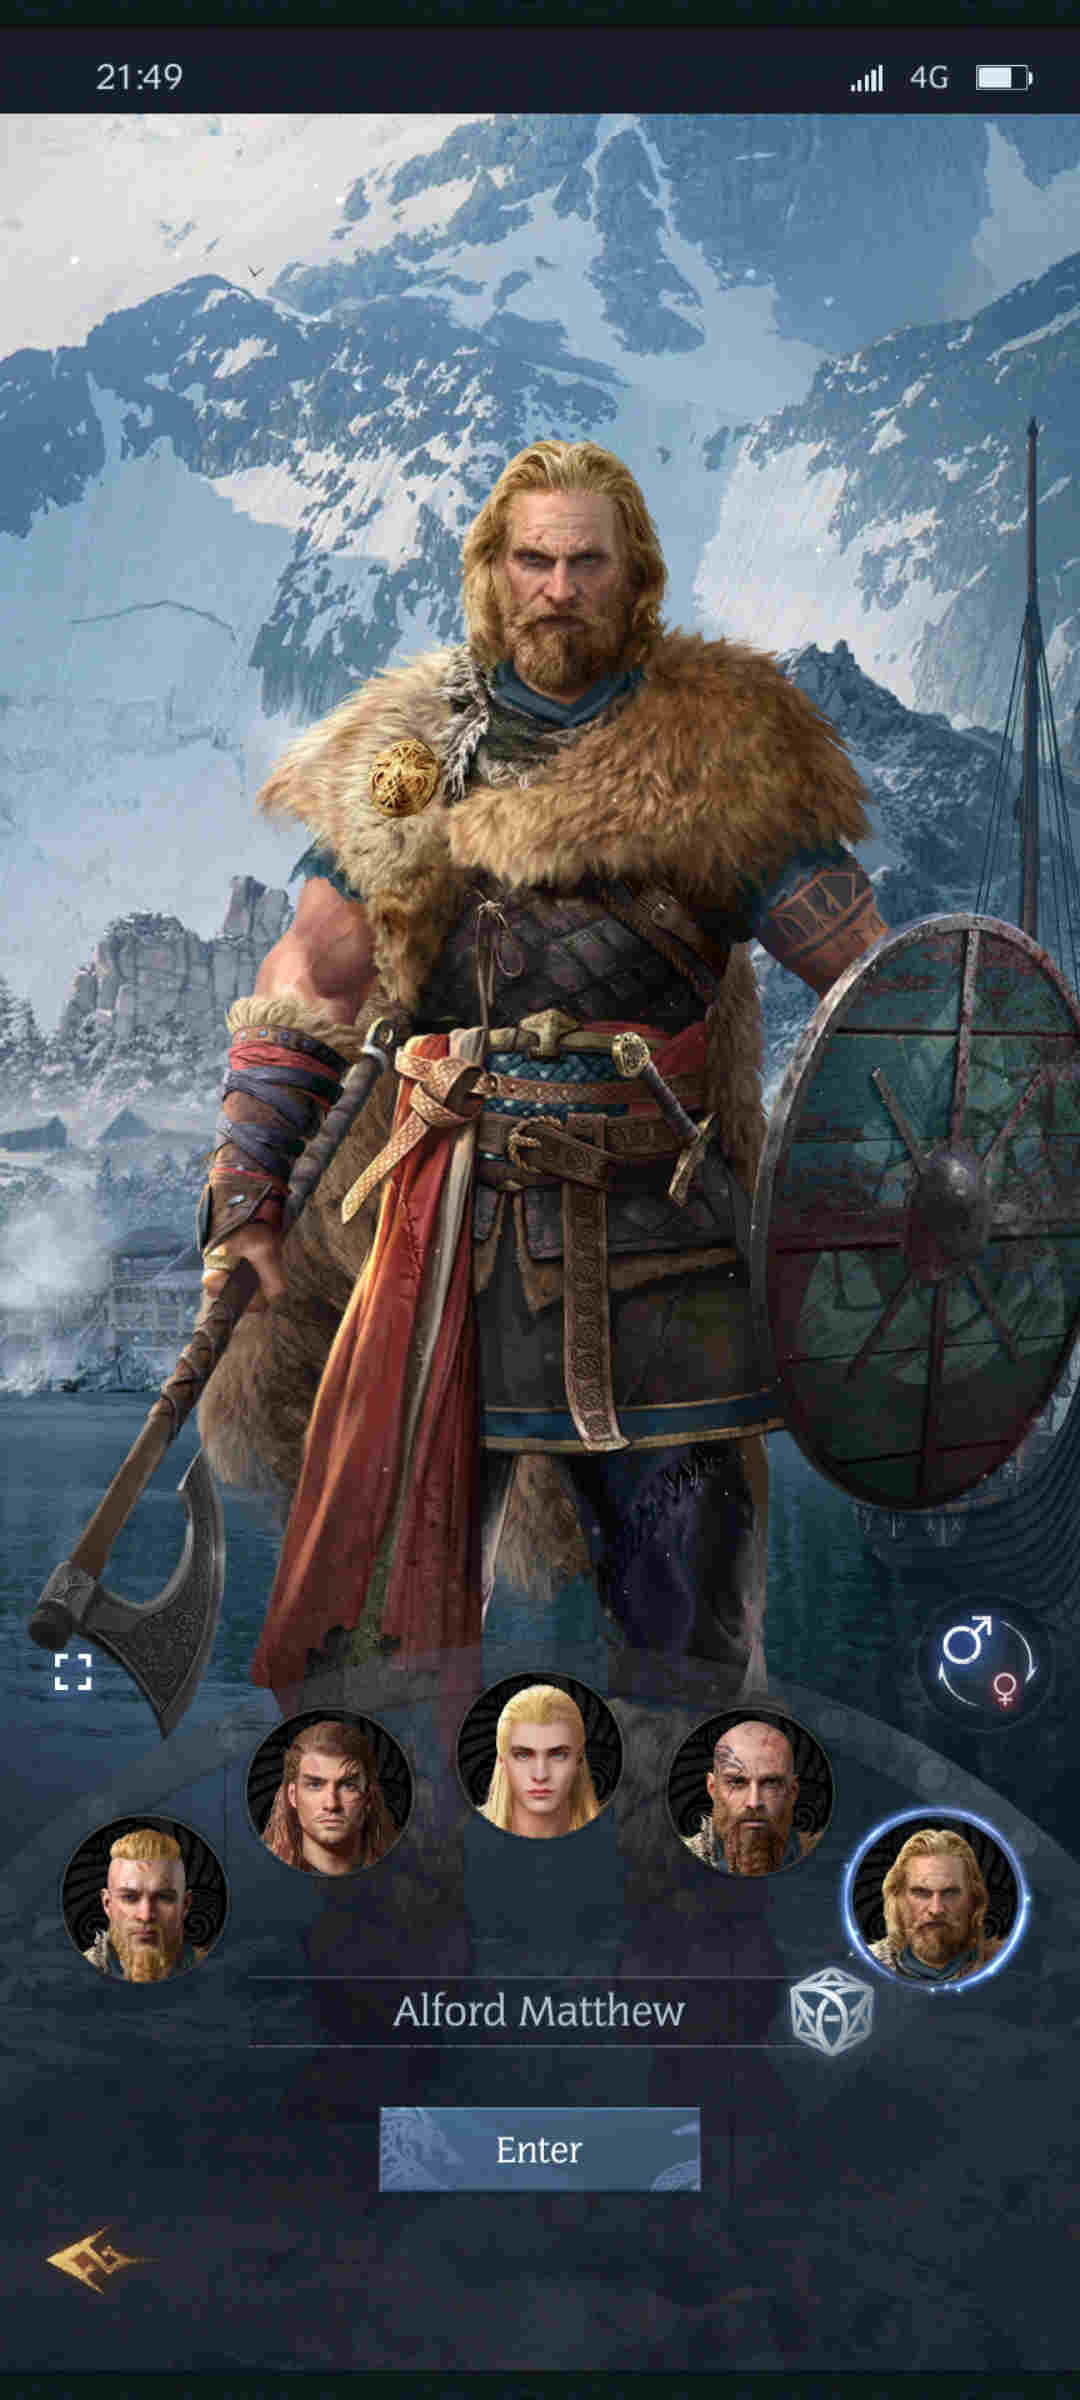 Vikingard